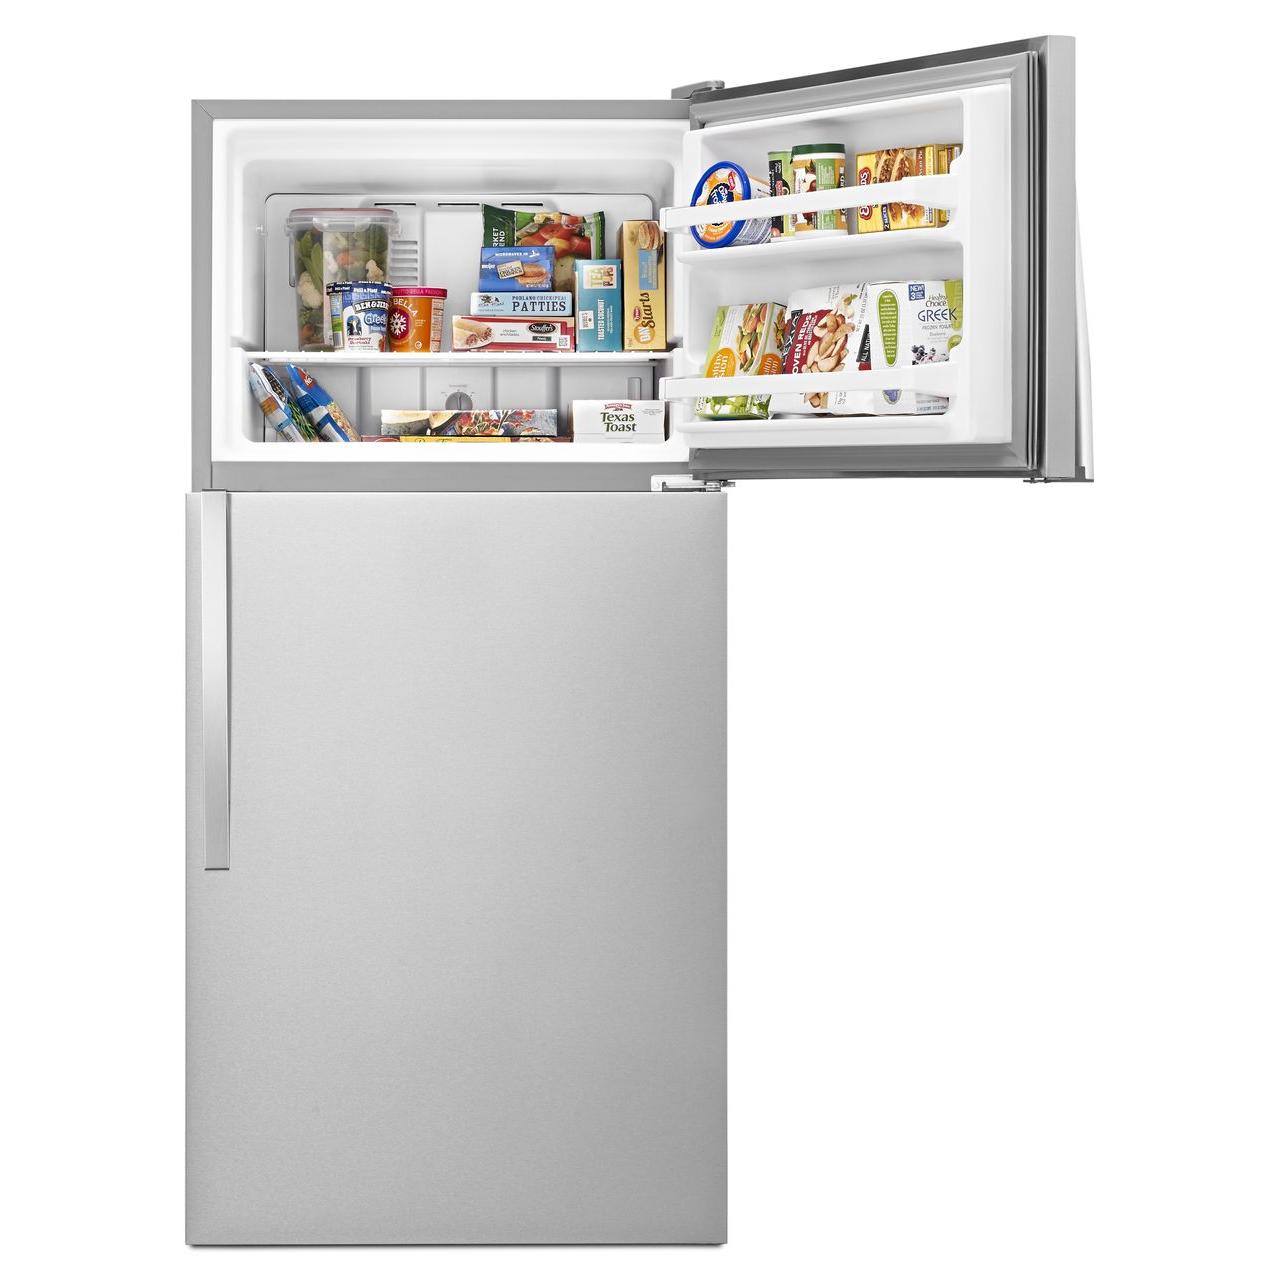 Whirlpool 30-inch, 18.2 cu. ft. Freestanding Top Freezer Refrigerator with Quiet Cooling WRT108FZDM